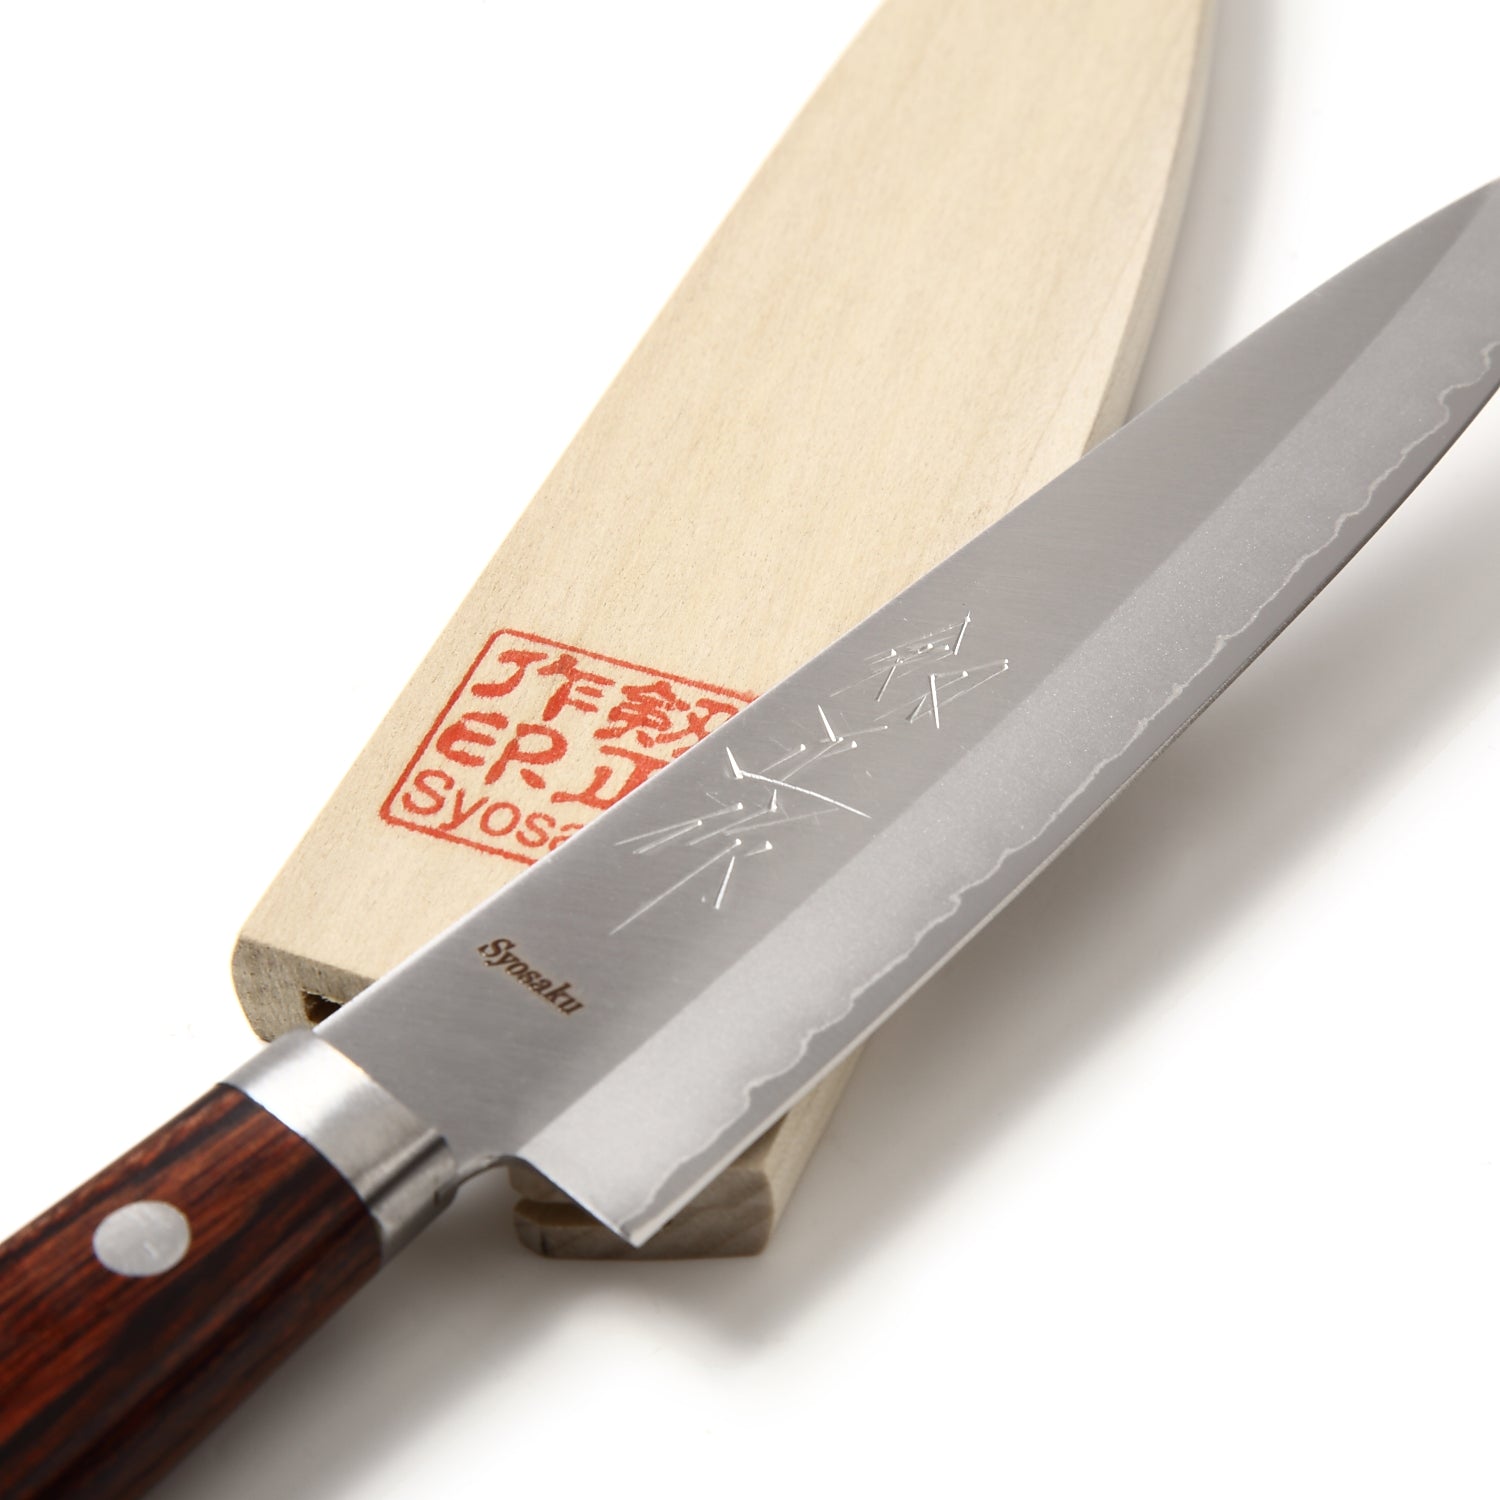 Syosaku Japanese Petty Knife VG-1 Gold Stainless Steel Mahogany Handle, 5.3-inch (135mm) with Magnolia Wood Sheath Saya Cover